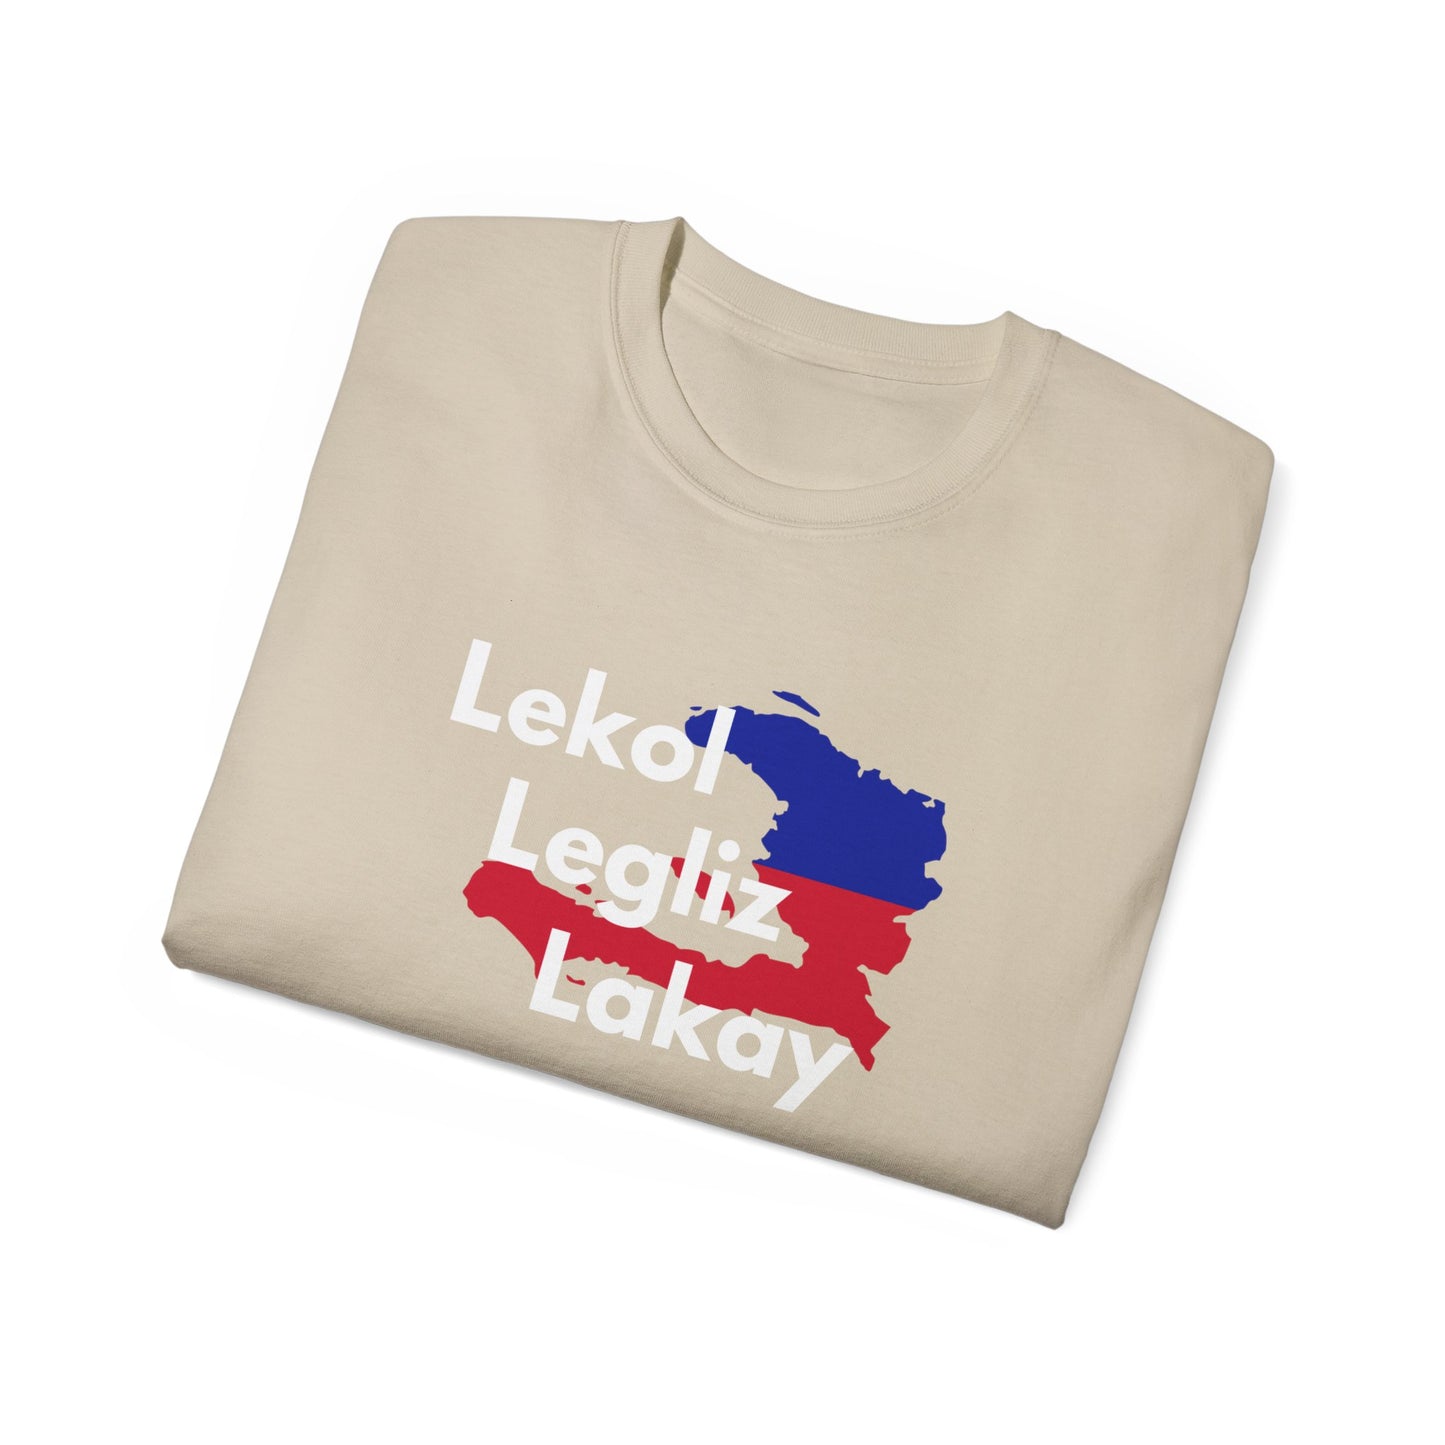 Lekol Legliz Lakay Tee Shirt - Sport Grey